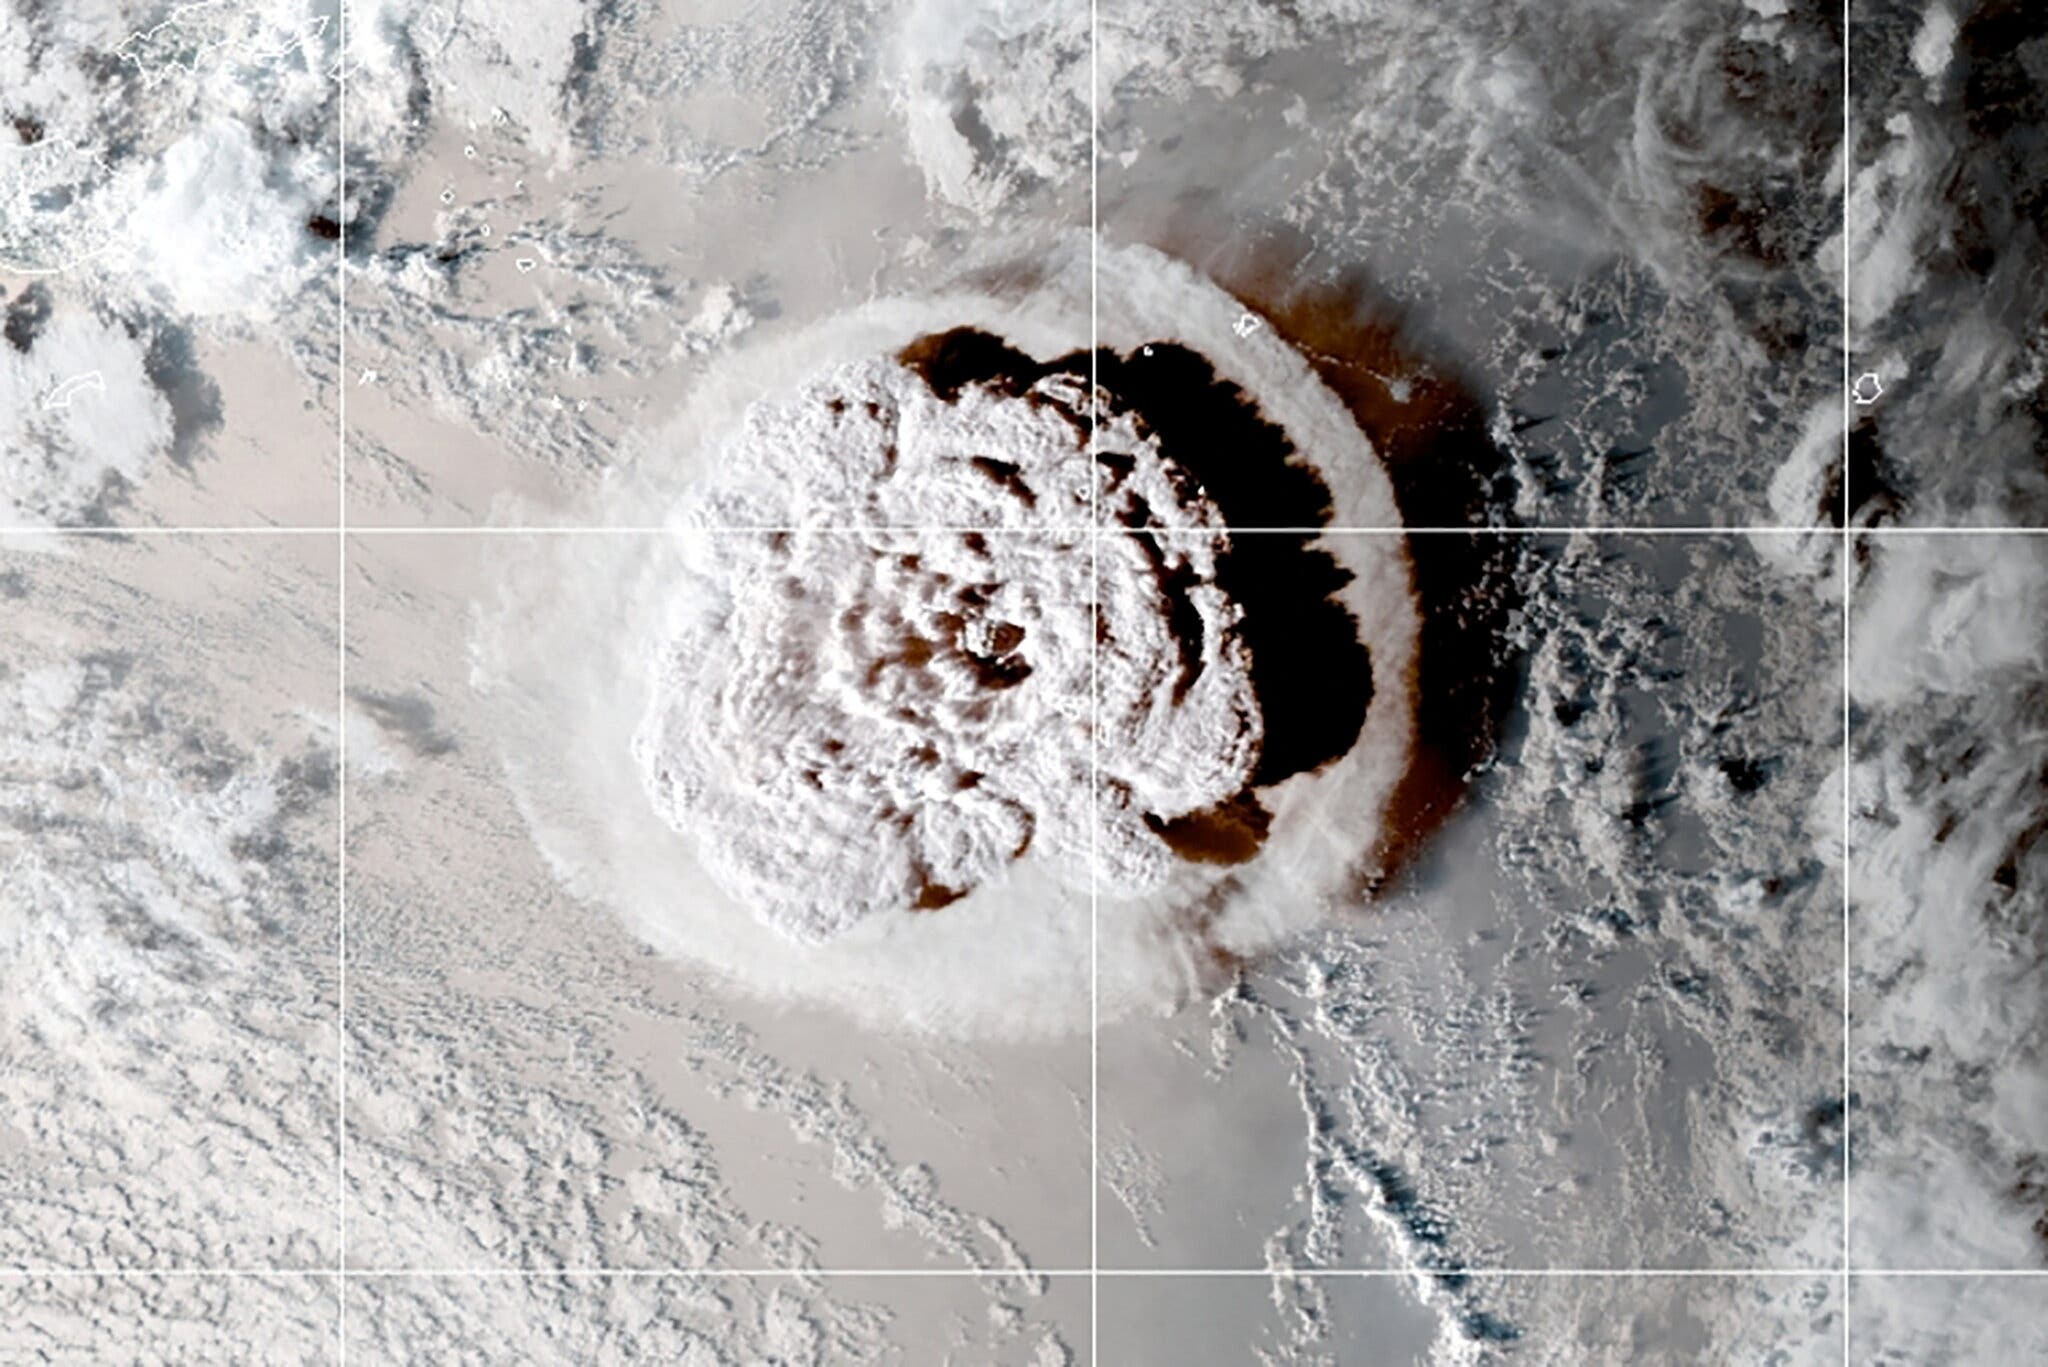 Satelite Image of the Ash Cloud